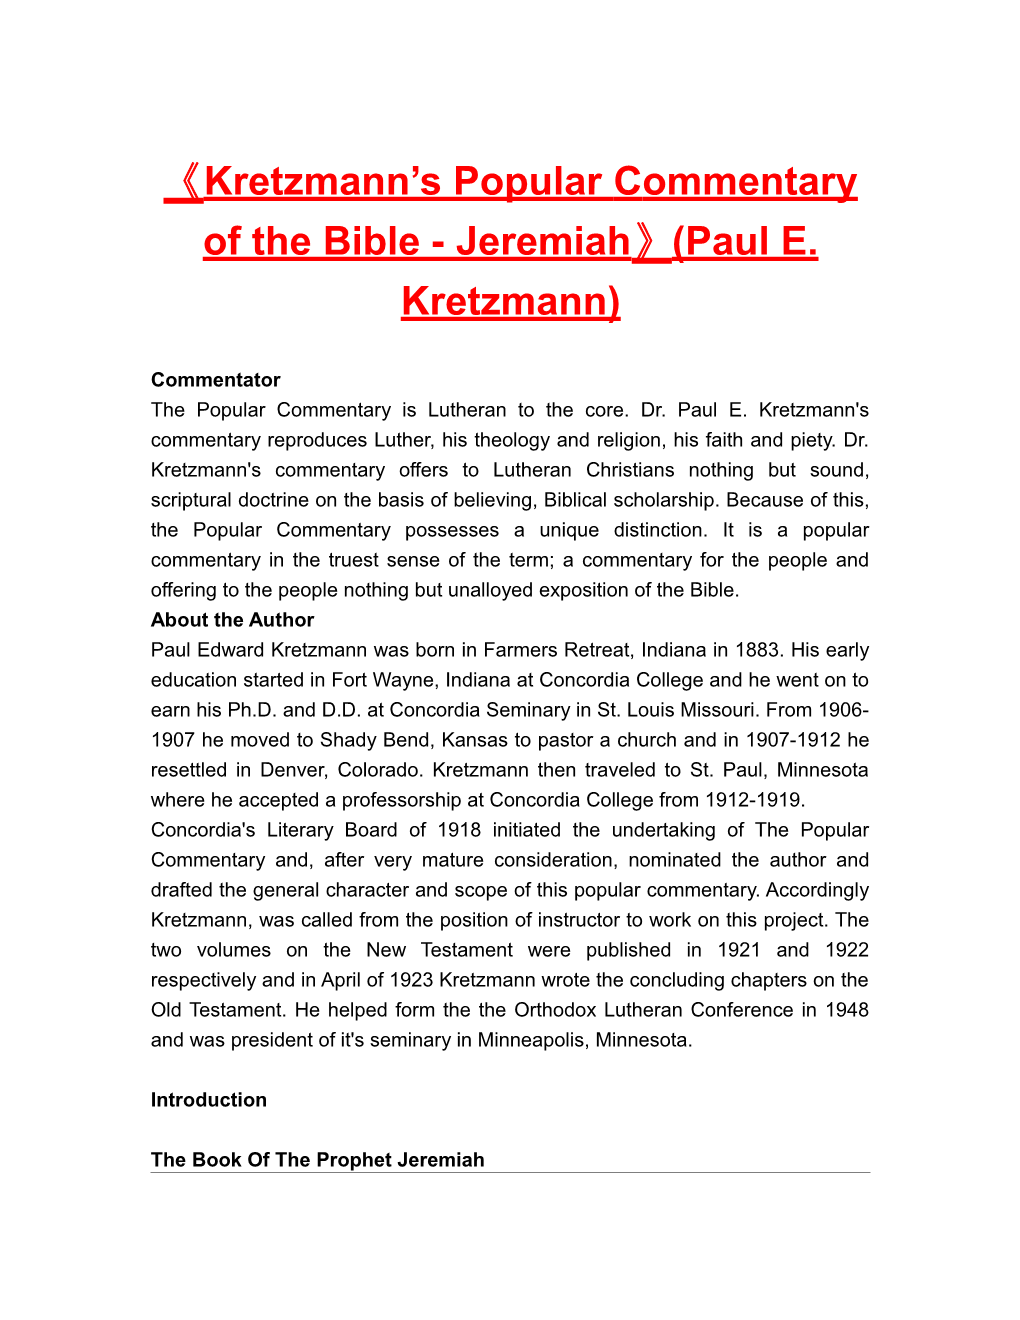 Kretzmann S Popular Commentary of the Bible - Jeremiah (Paul E. Kretzmann)